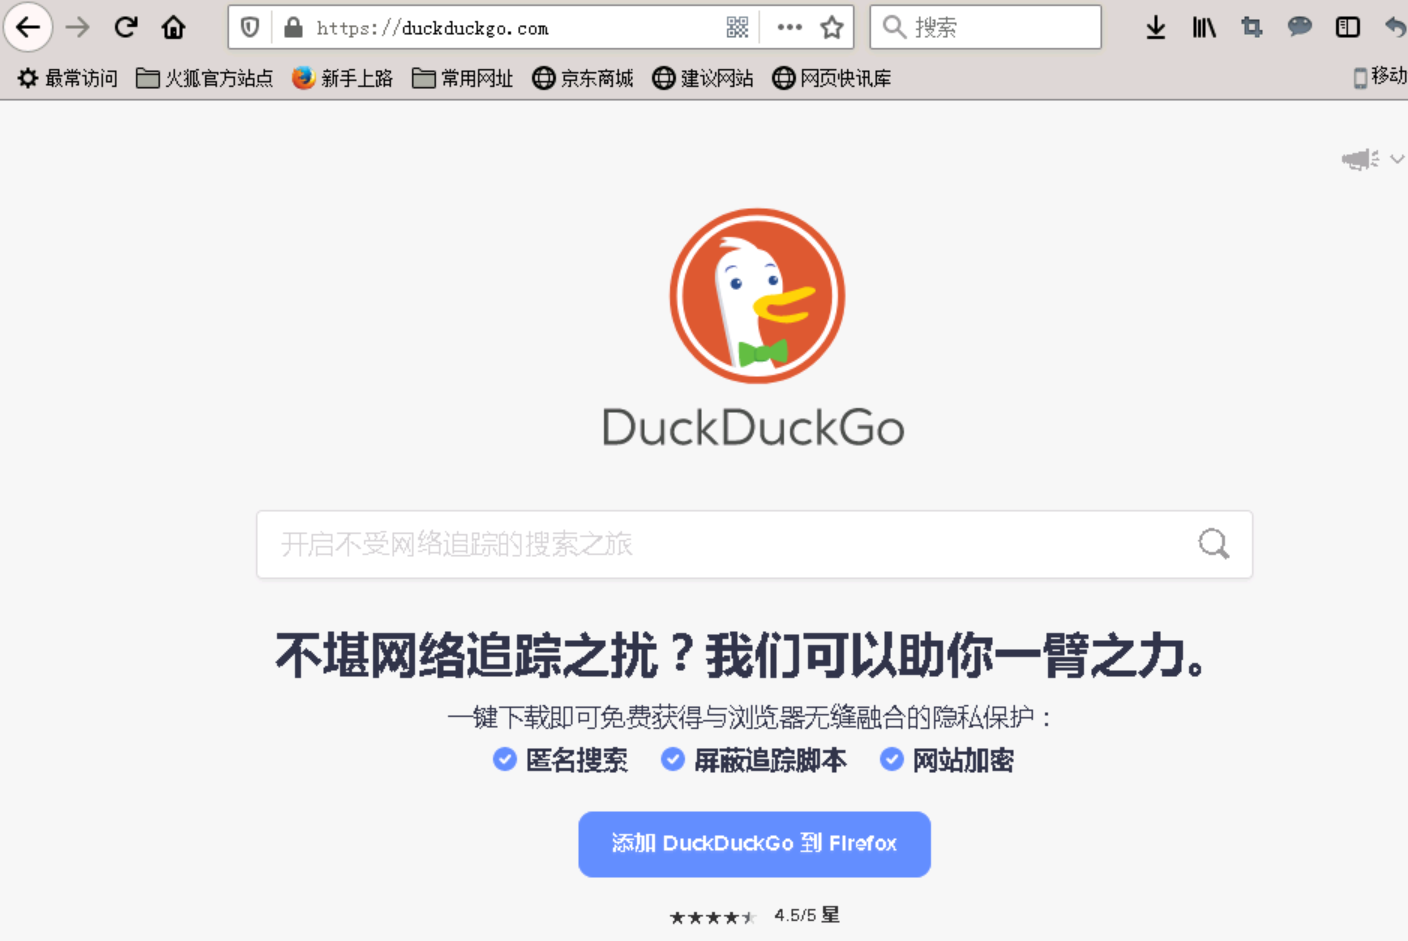 duckduckgo - search engine